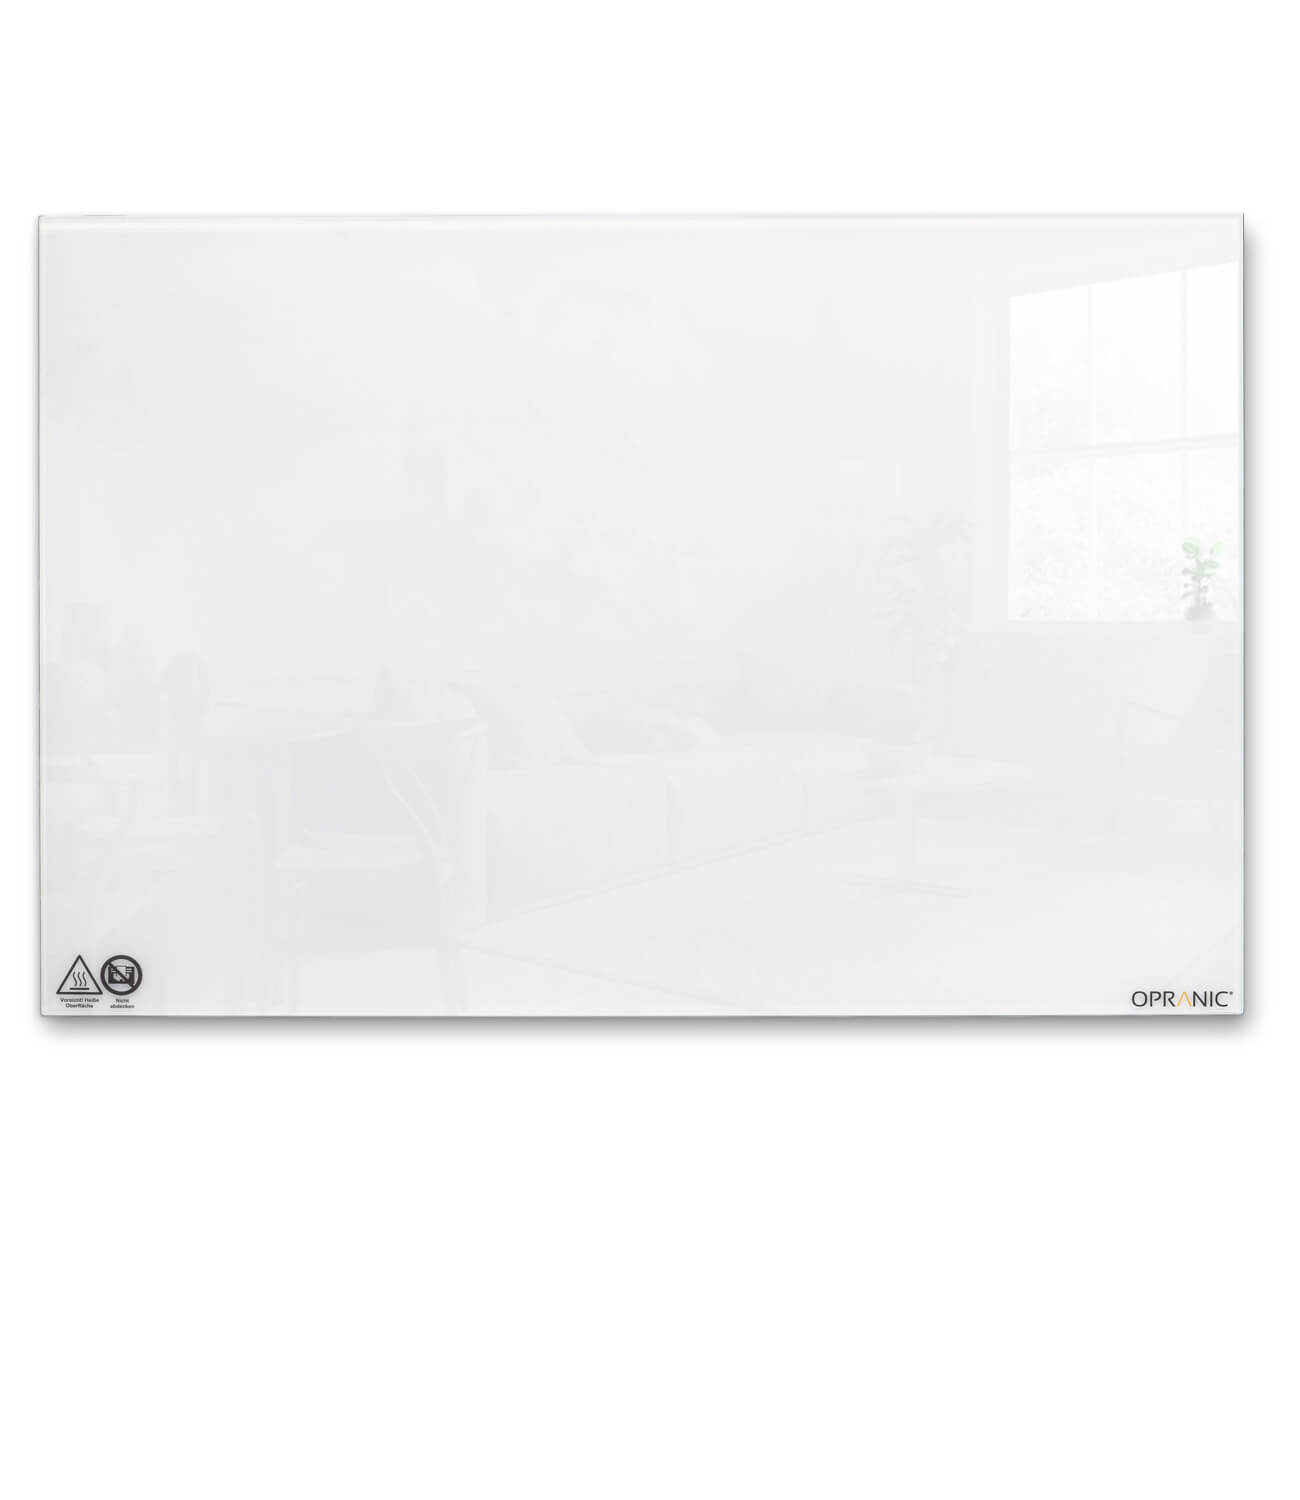 OPRANIC P7, Glass 700W, Infrared Panel Heater, White